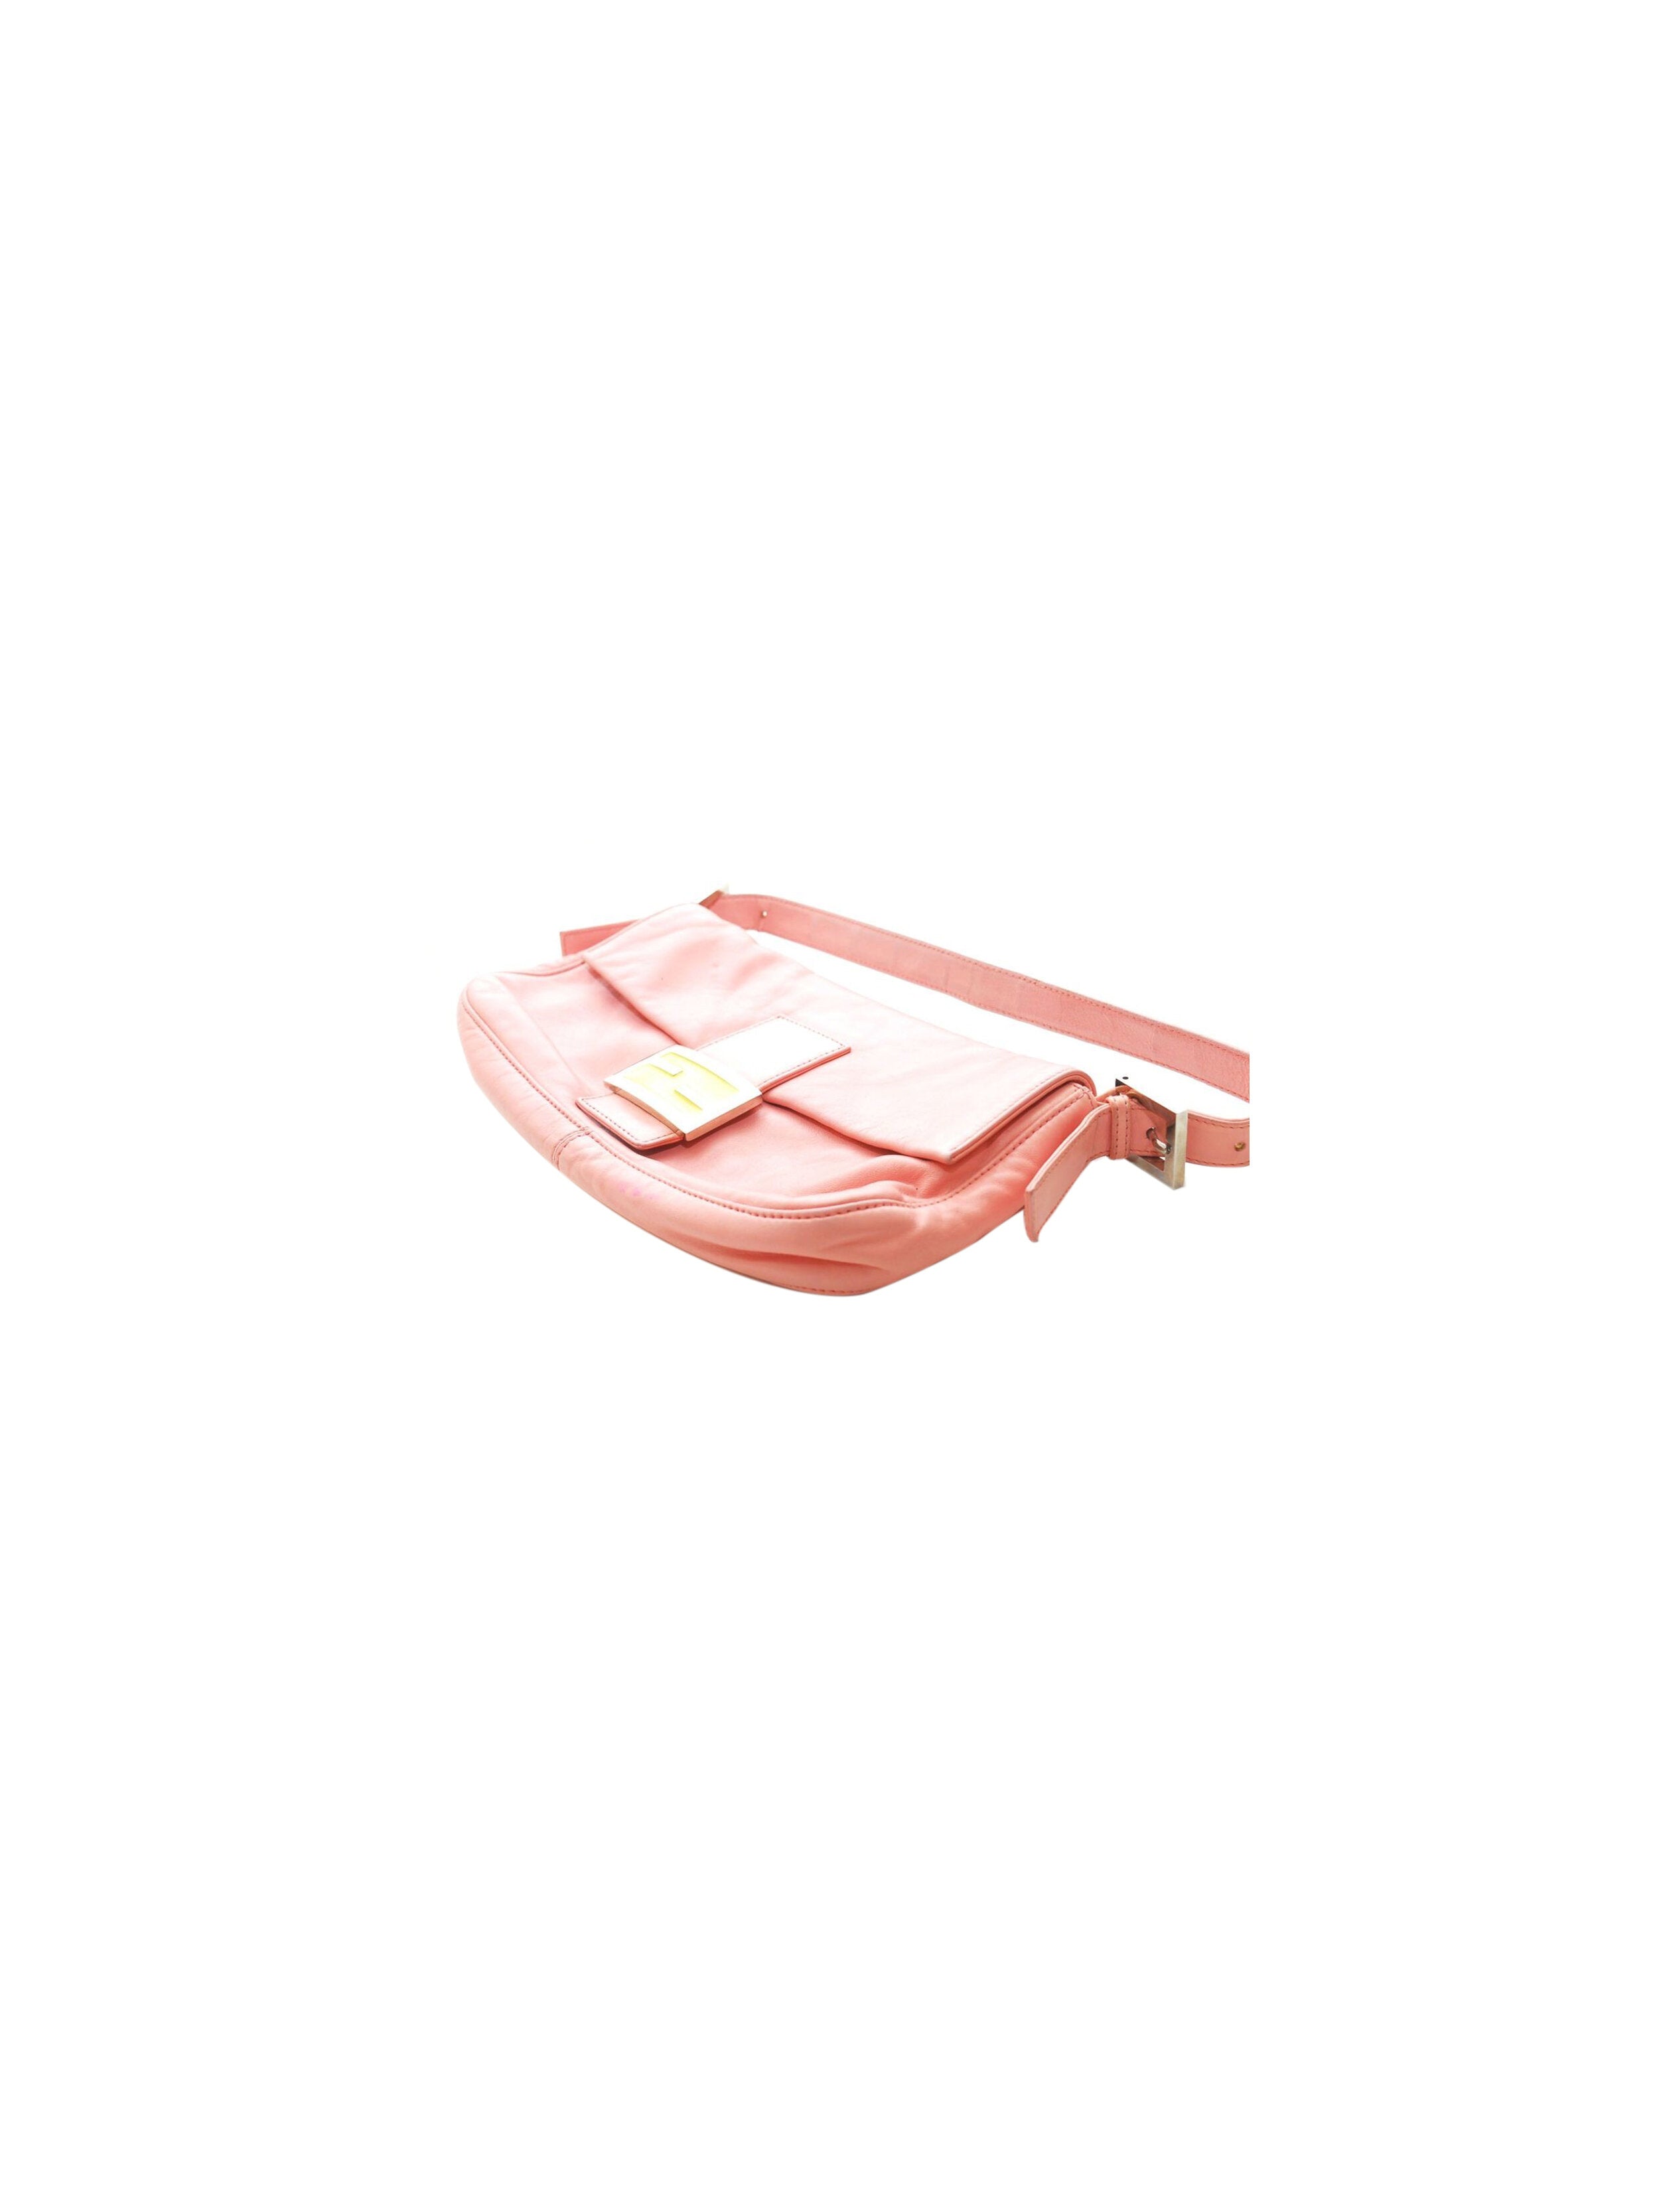 Baguette handbag Fendi Pink in Wicker - 32018233